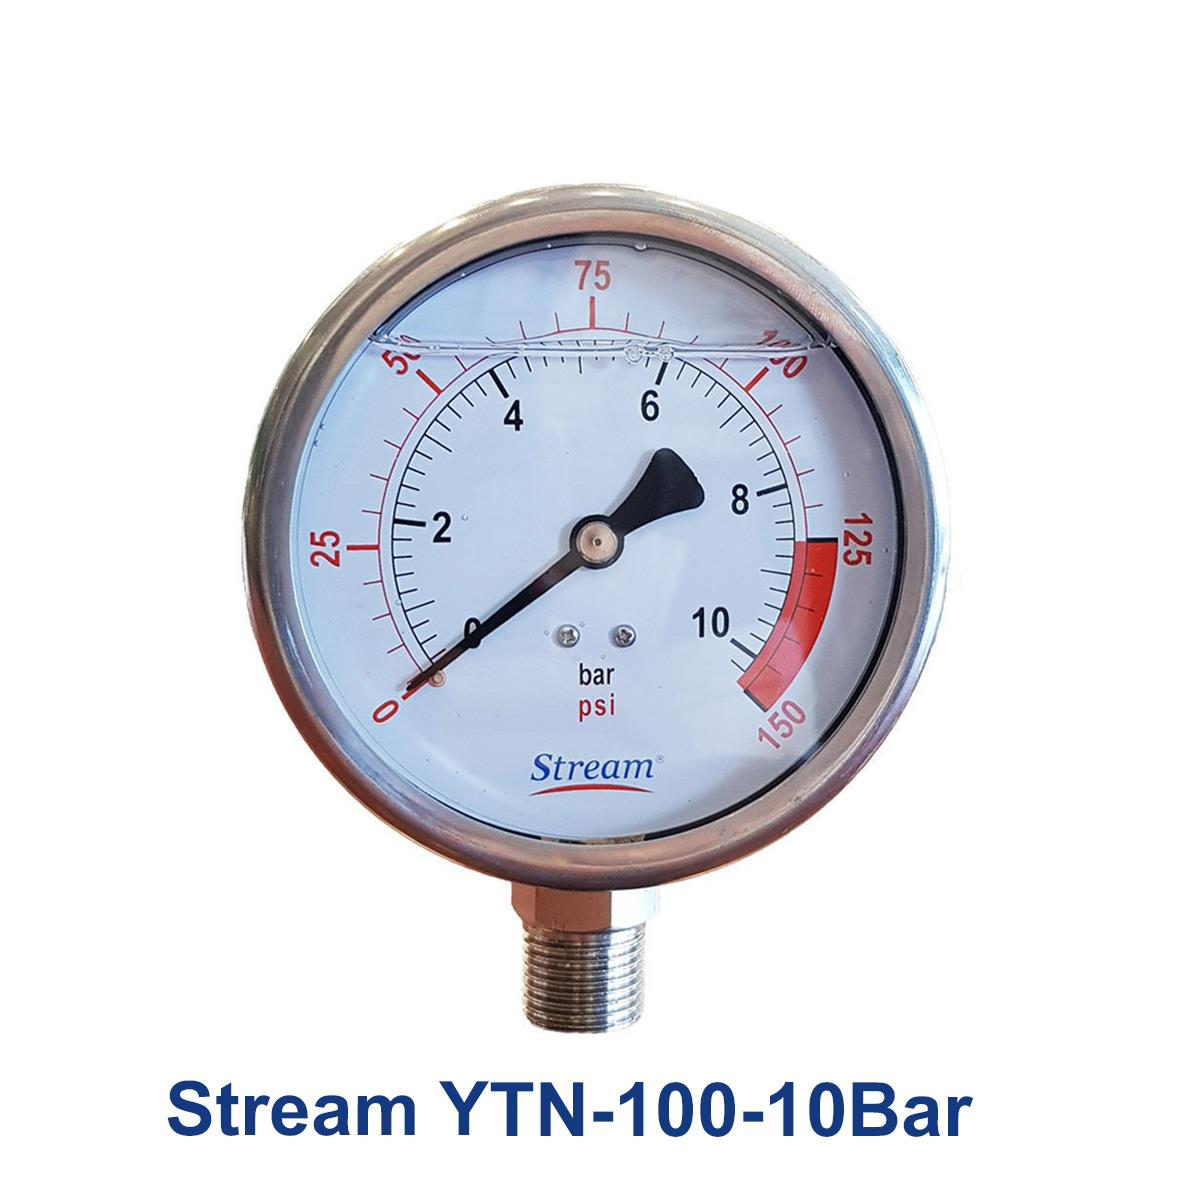 Stream-YTN-100-10Bar